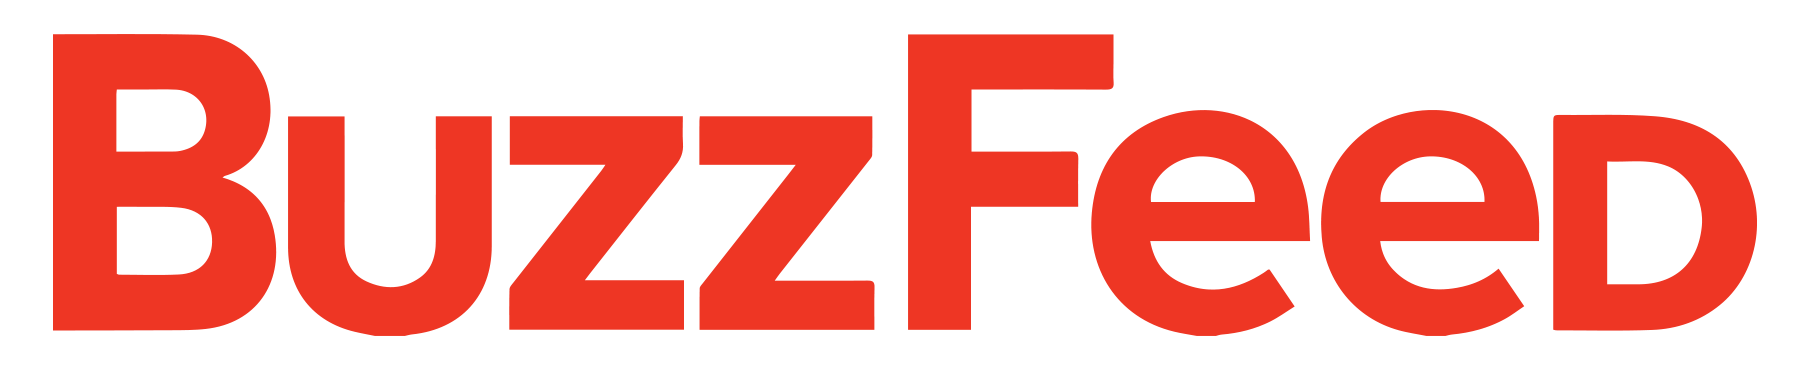 Buzzfeed Logo PNG